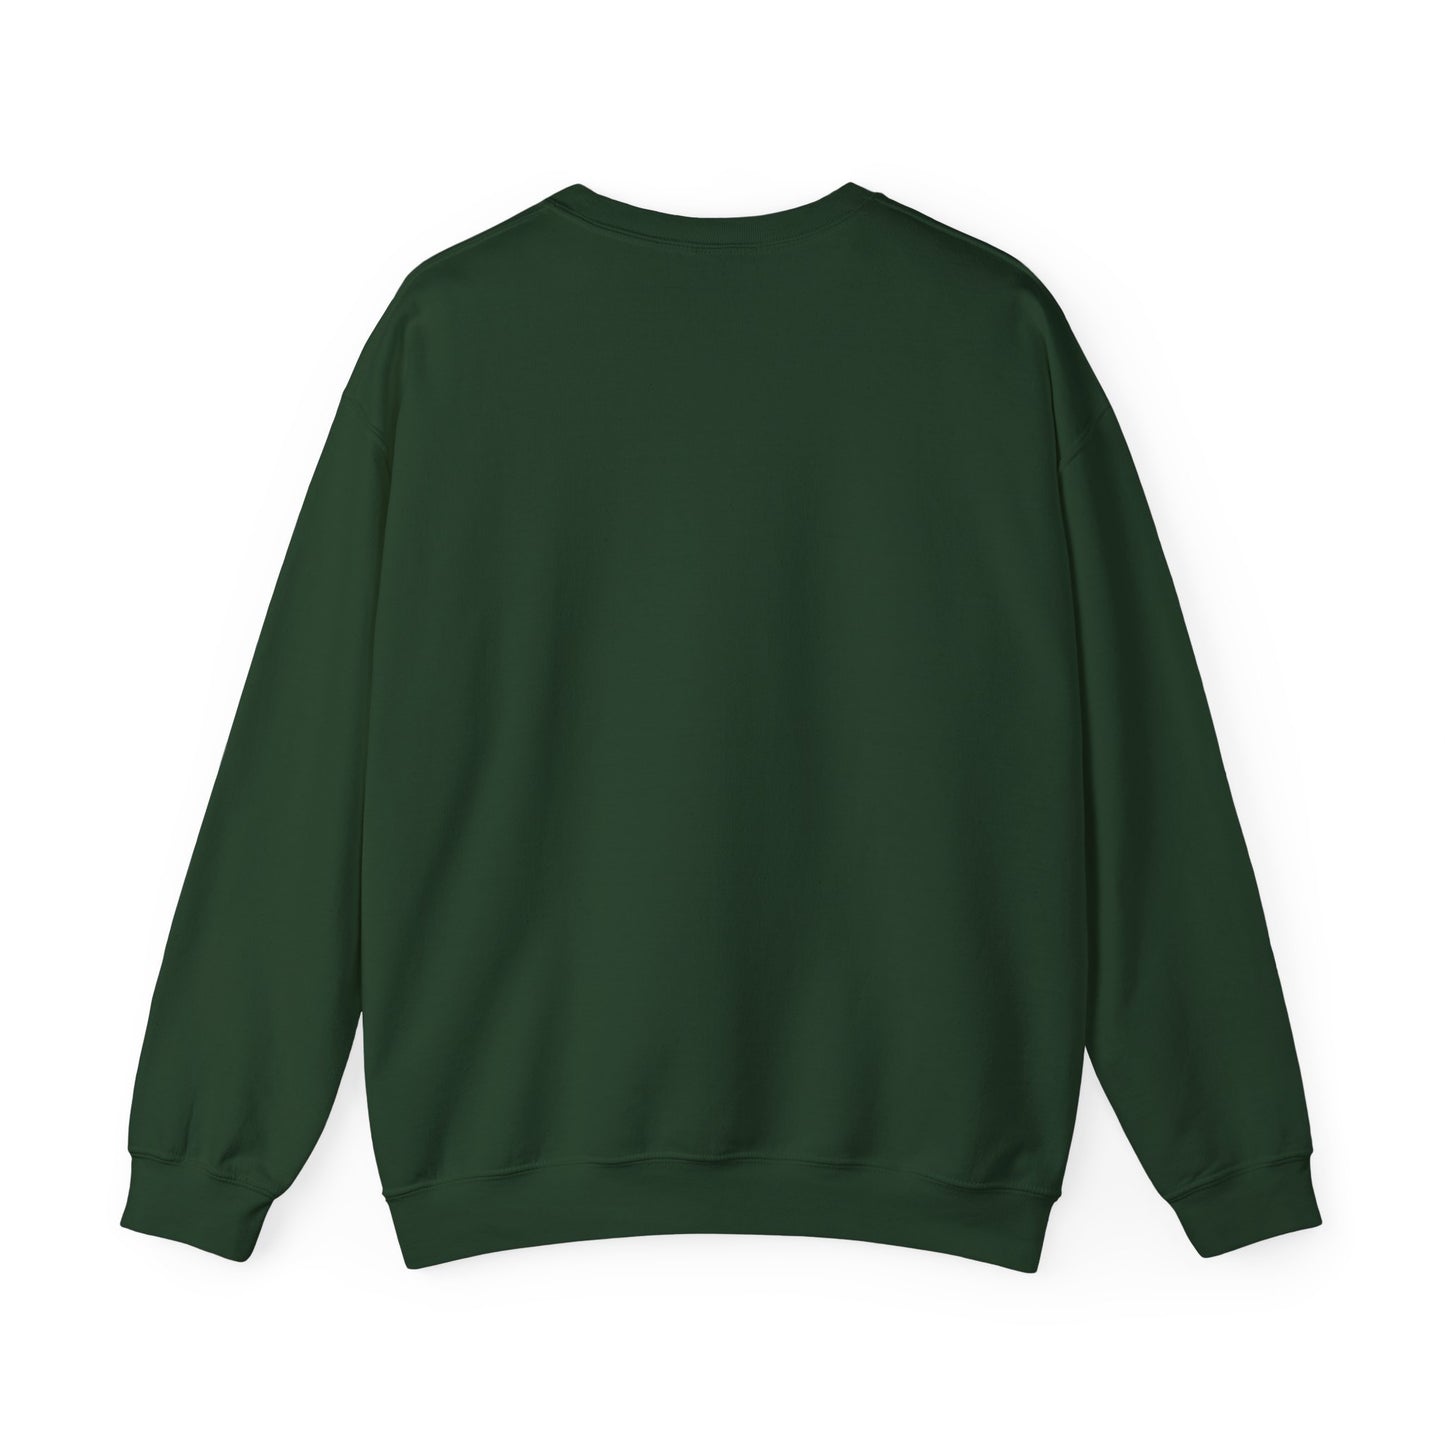 "Cheers B*tches" - HeavyBlend Unisex Crewneck Sweatshirt - St. Patrick's Day Sweatshirt